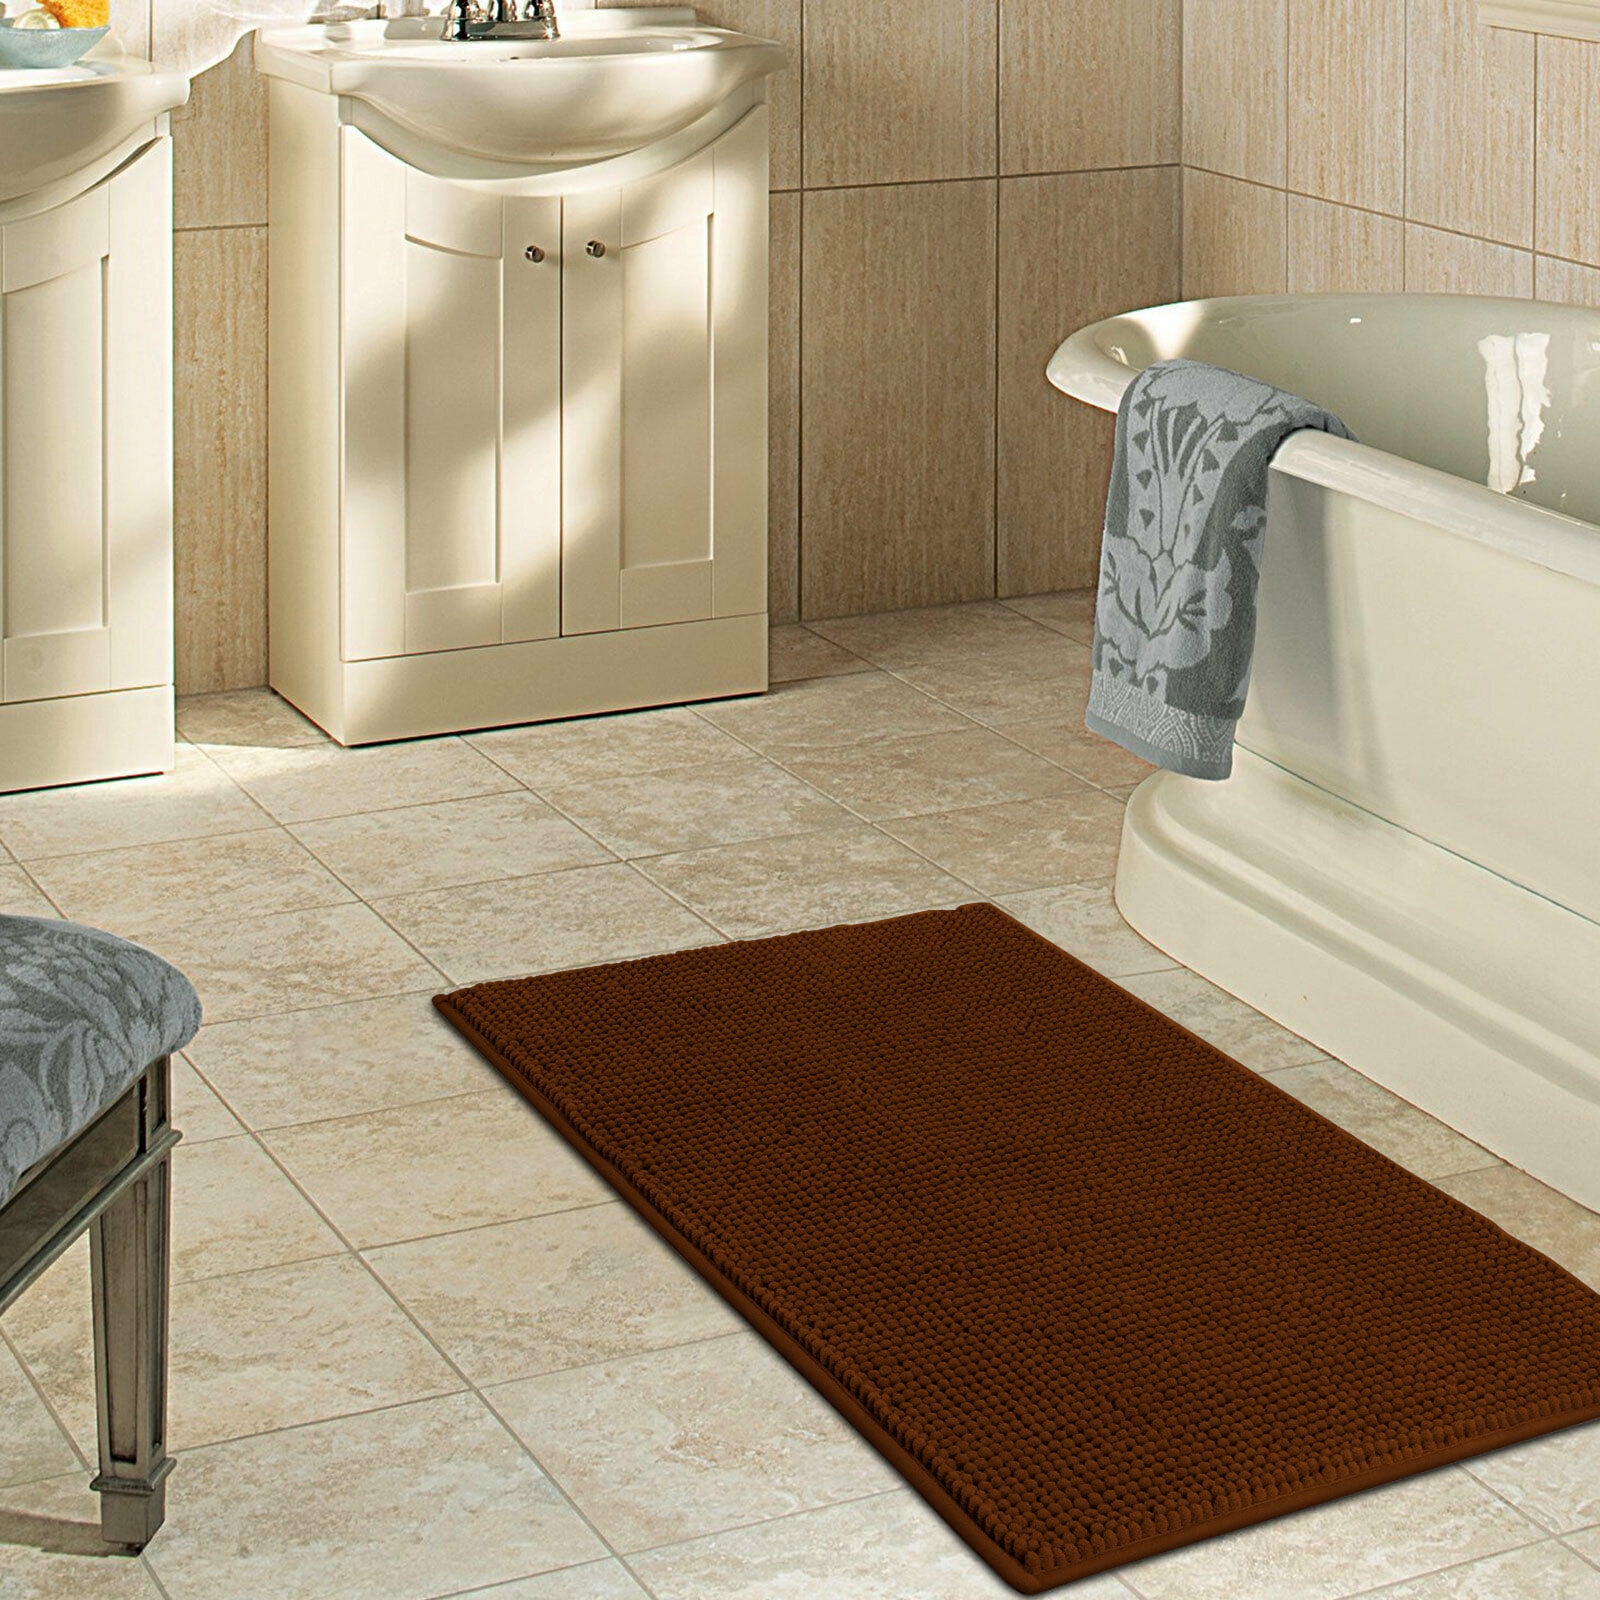 Moocorvic Bathroom Mat , Bath Mat Small Bathroom Rugs for Bedroom Shower Rug, High Absorbent and Anti Slip, Machine Washable for Bathtub, Shower (31.5